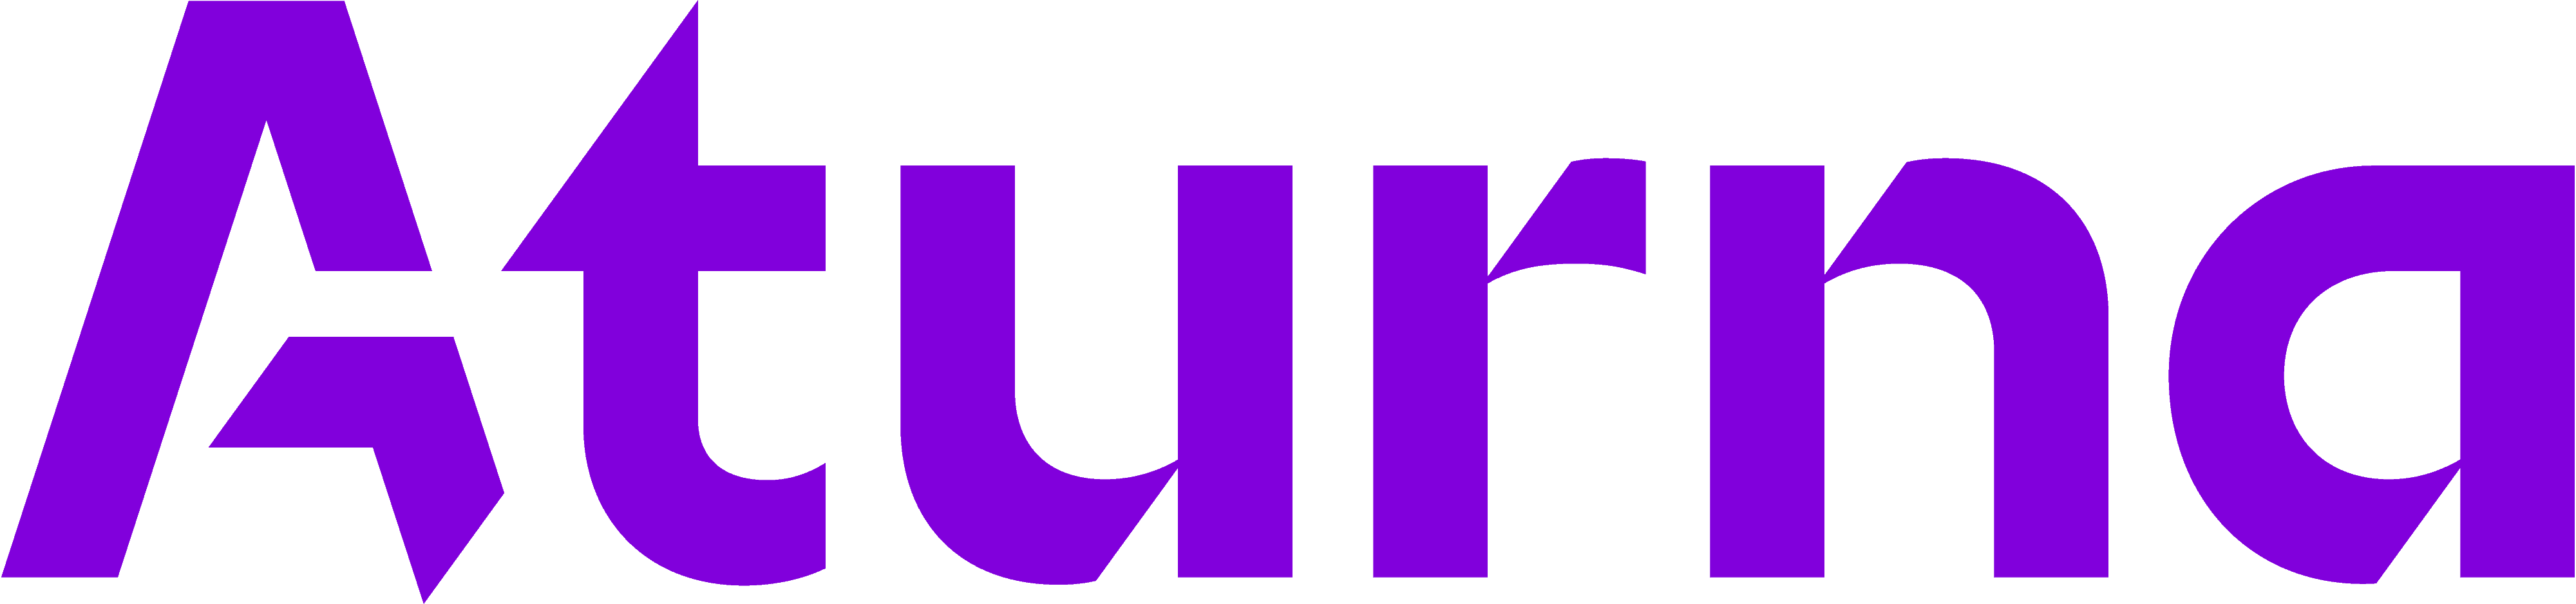 Guidr Logo